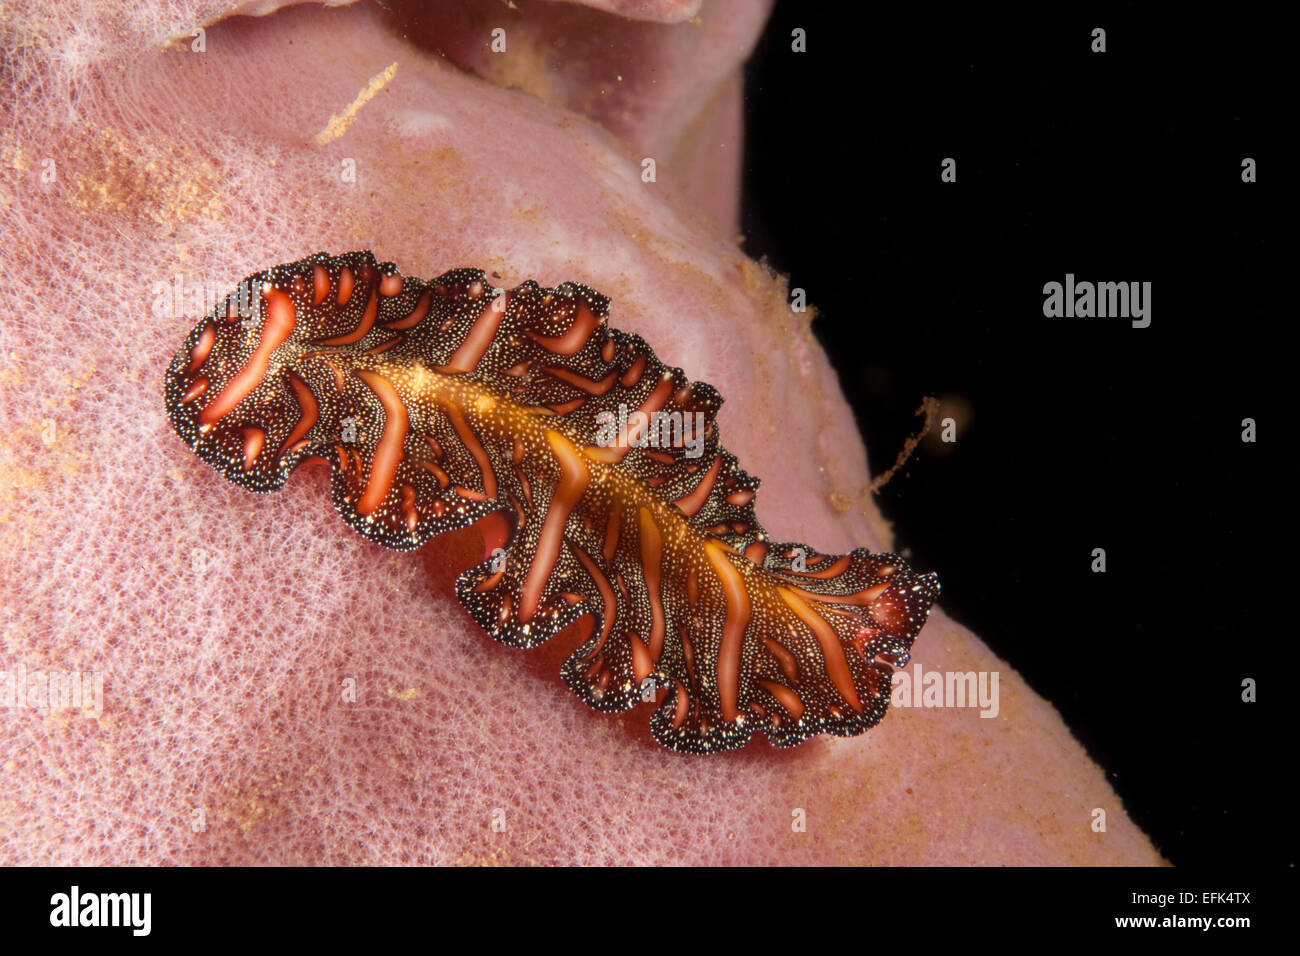 Polyclad Flatworm, Pseudobiceros bedfordi, Indonesia Stock Photo